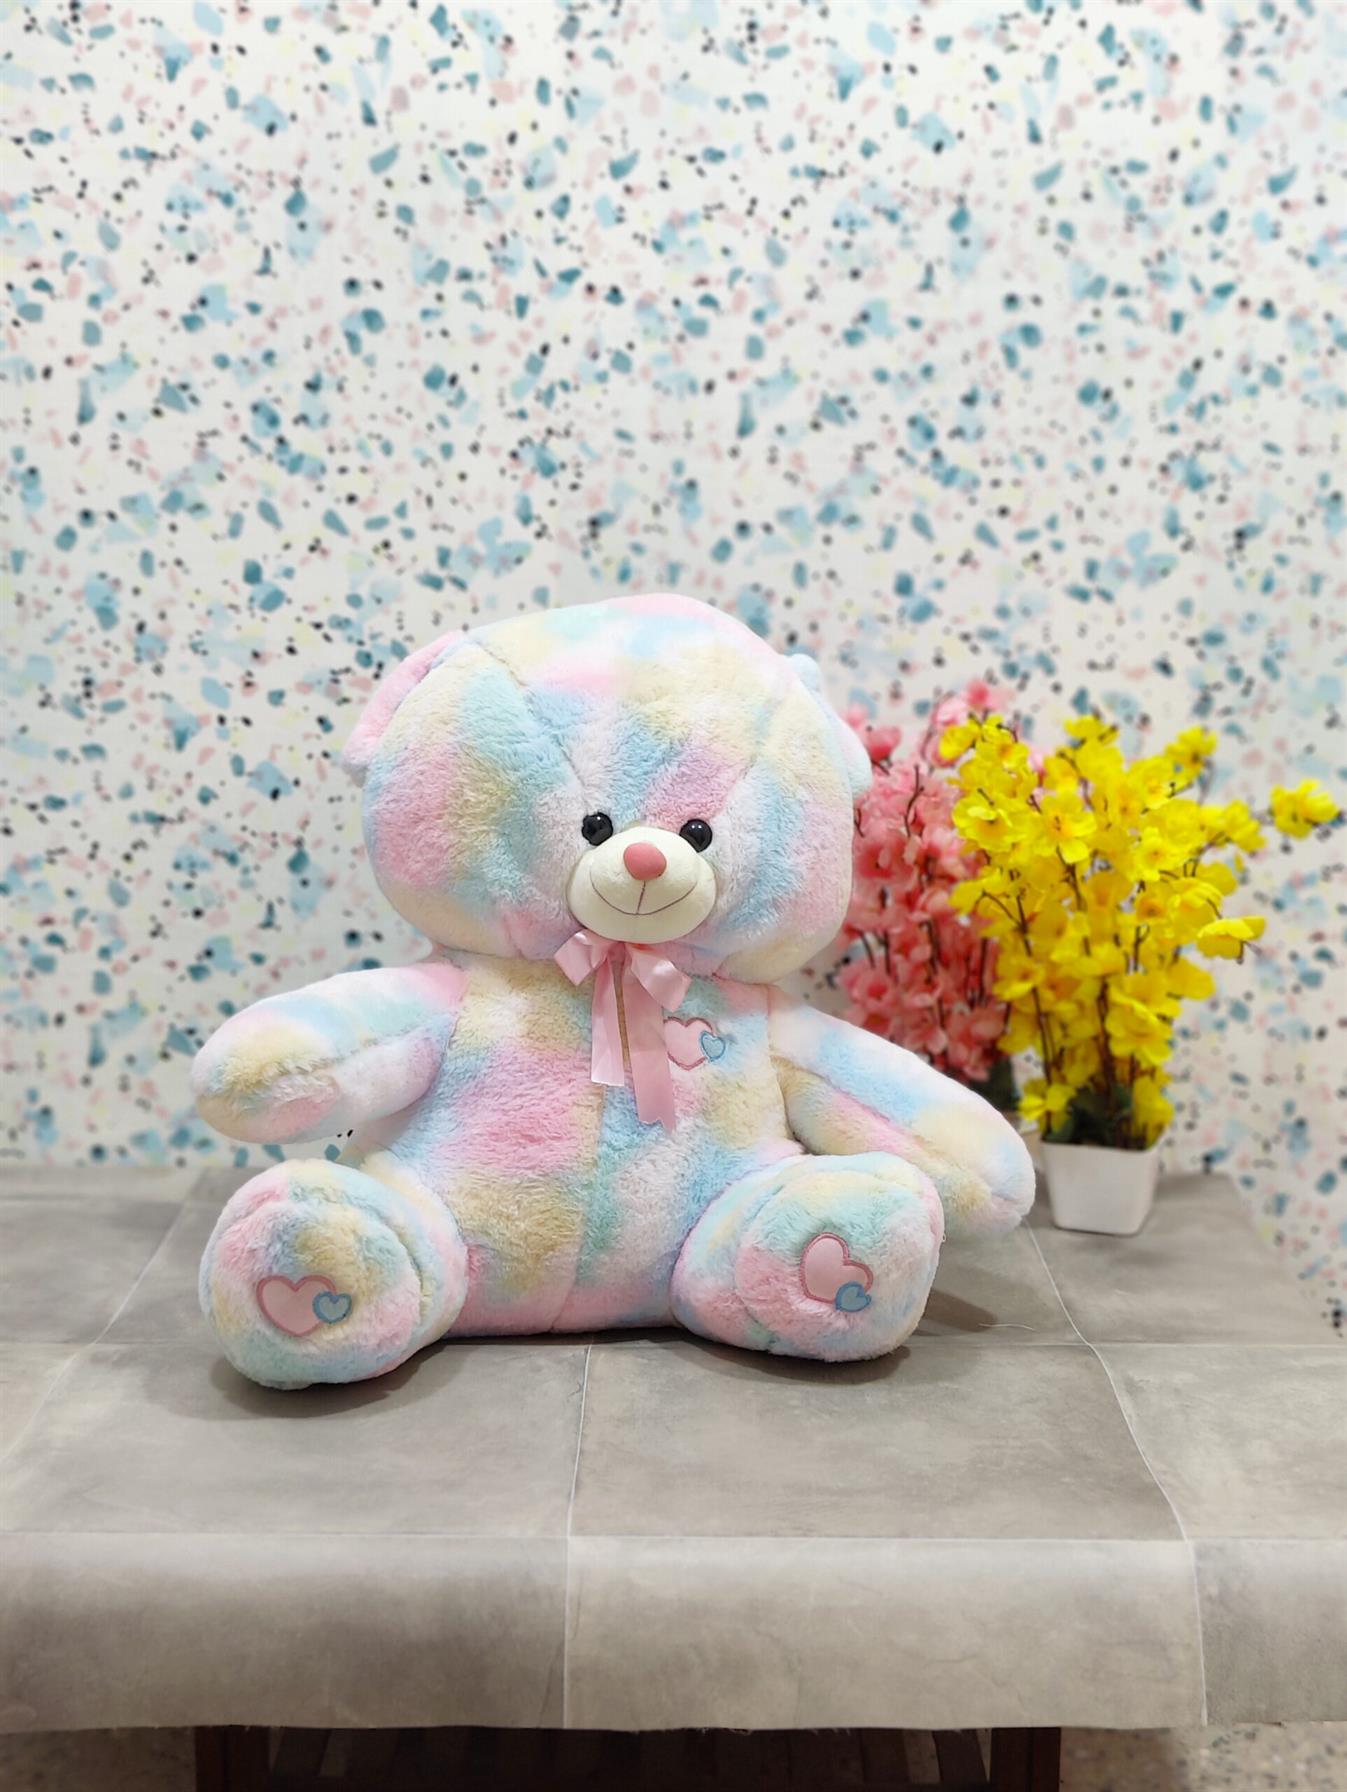 Rainbow Teddy Bear Soft Toy Stuffed Animal Plush Teddy Gift For Kids Girls Boys Love4103